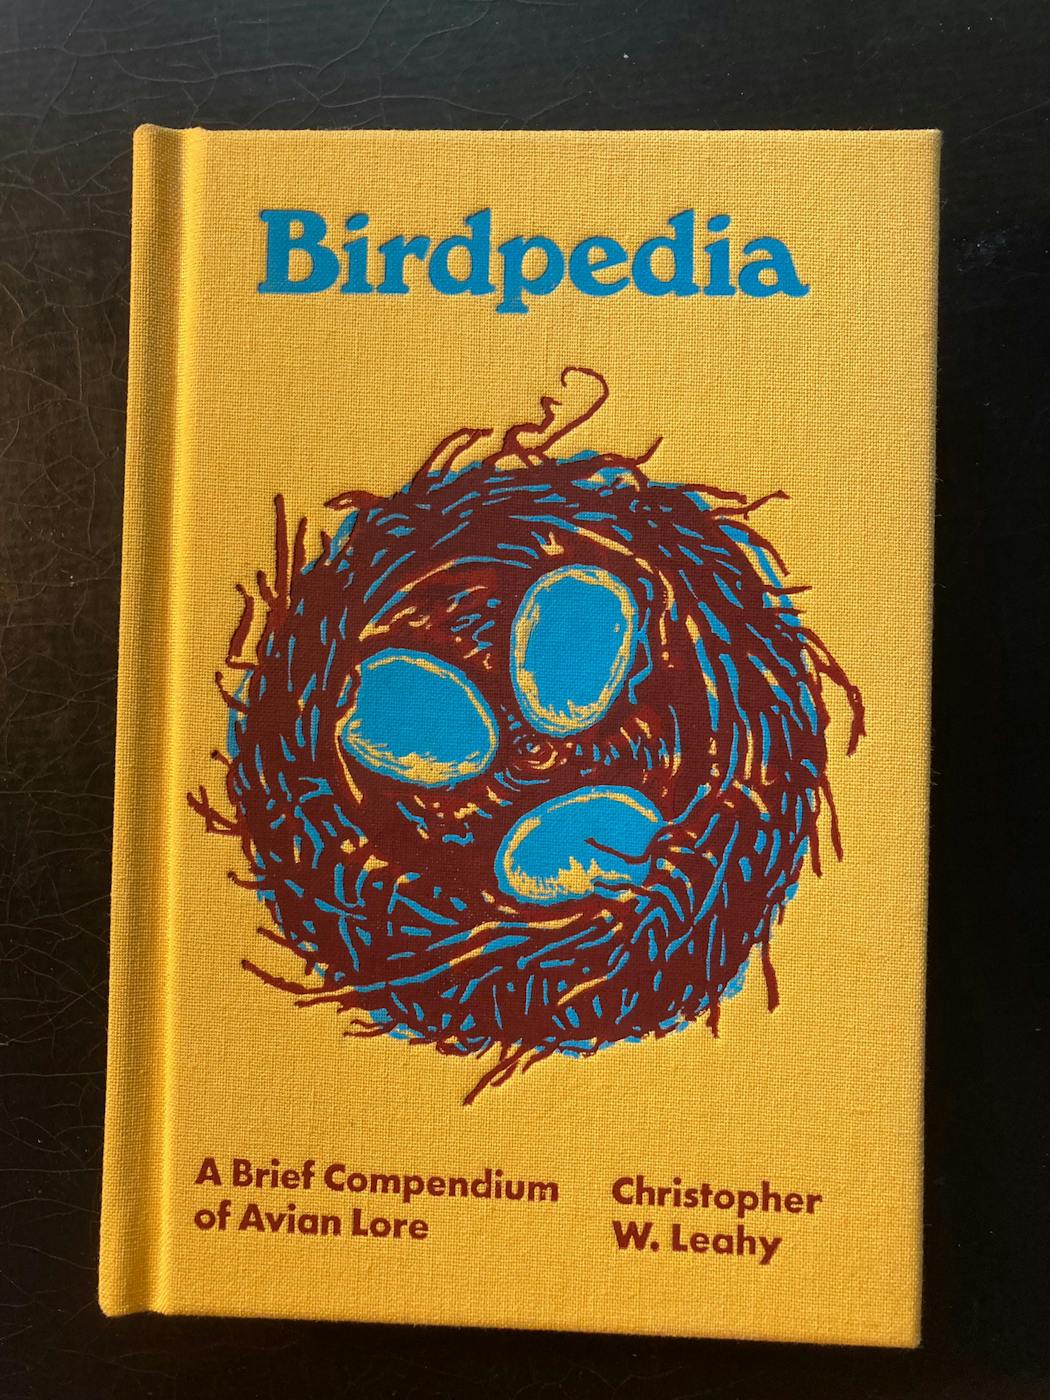 “Birdpedia”